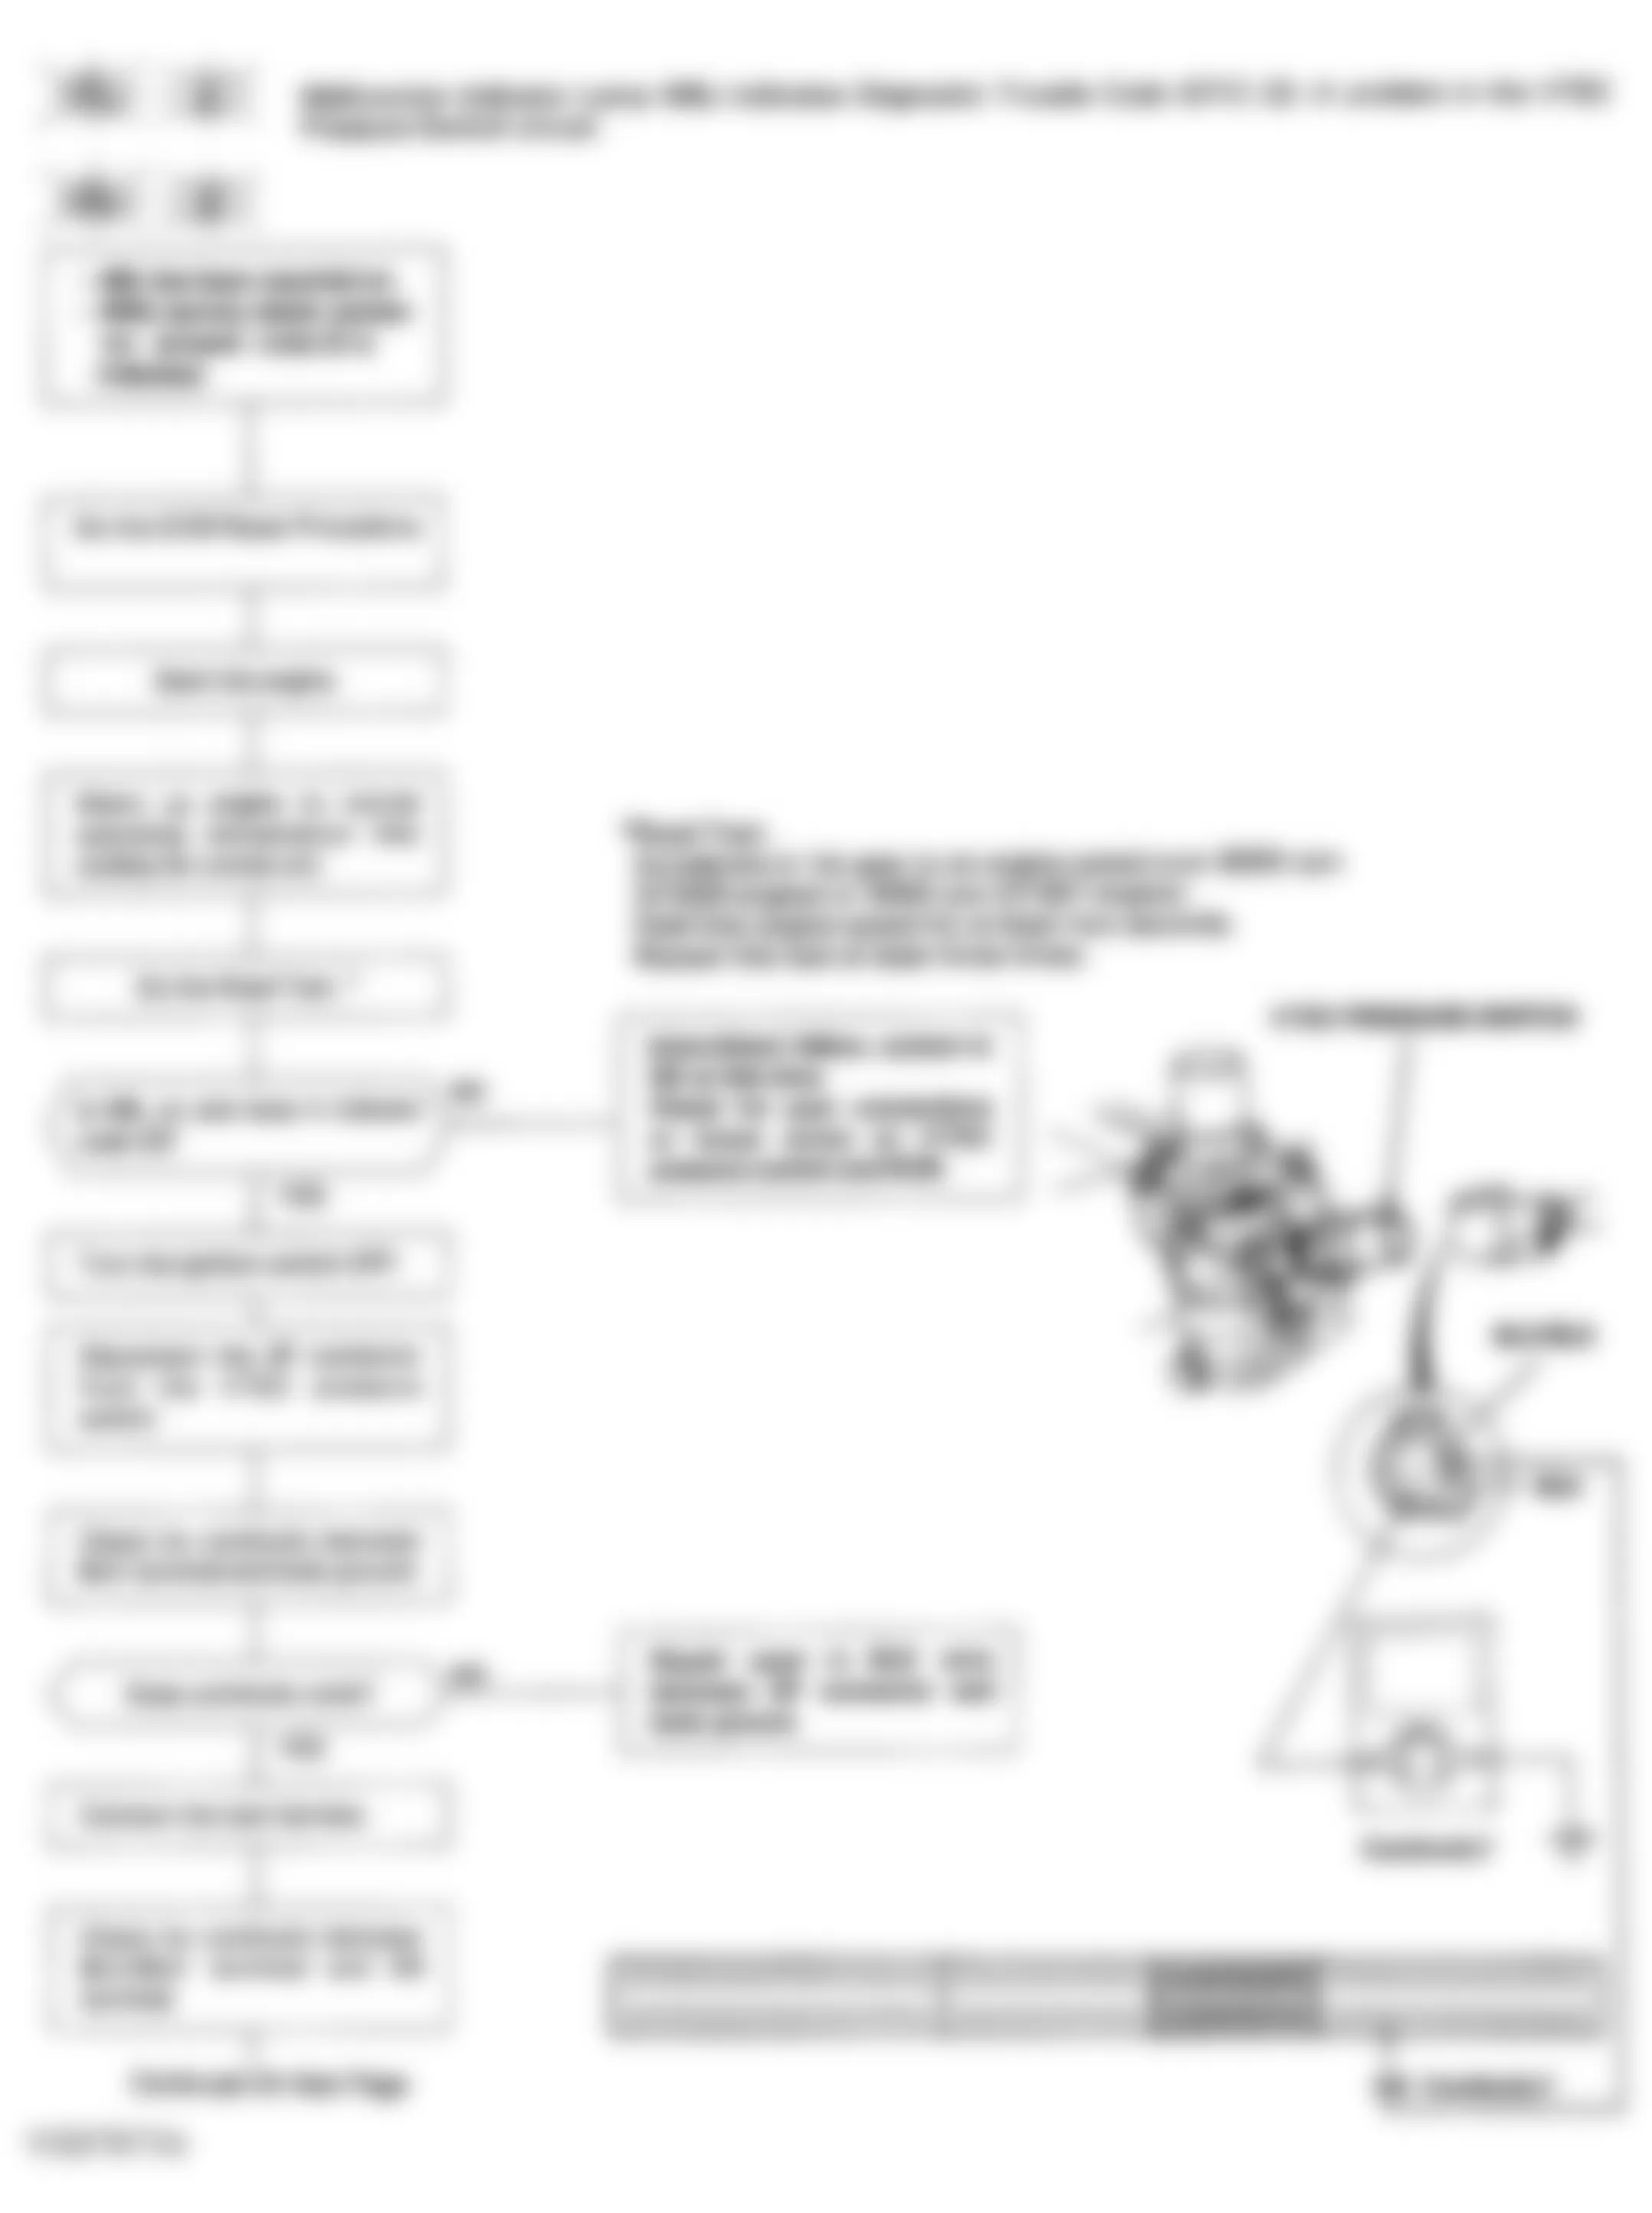 Honda Civic VX 1993 - Component Locations -  Code 22 Flowchart, VTEC Pressure Switch (1 of 3)